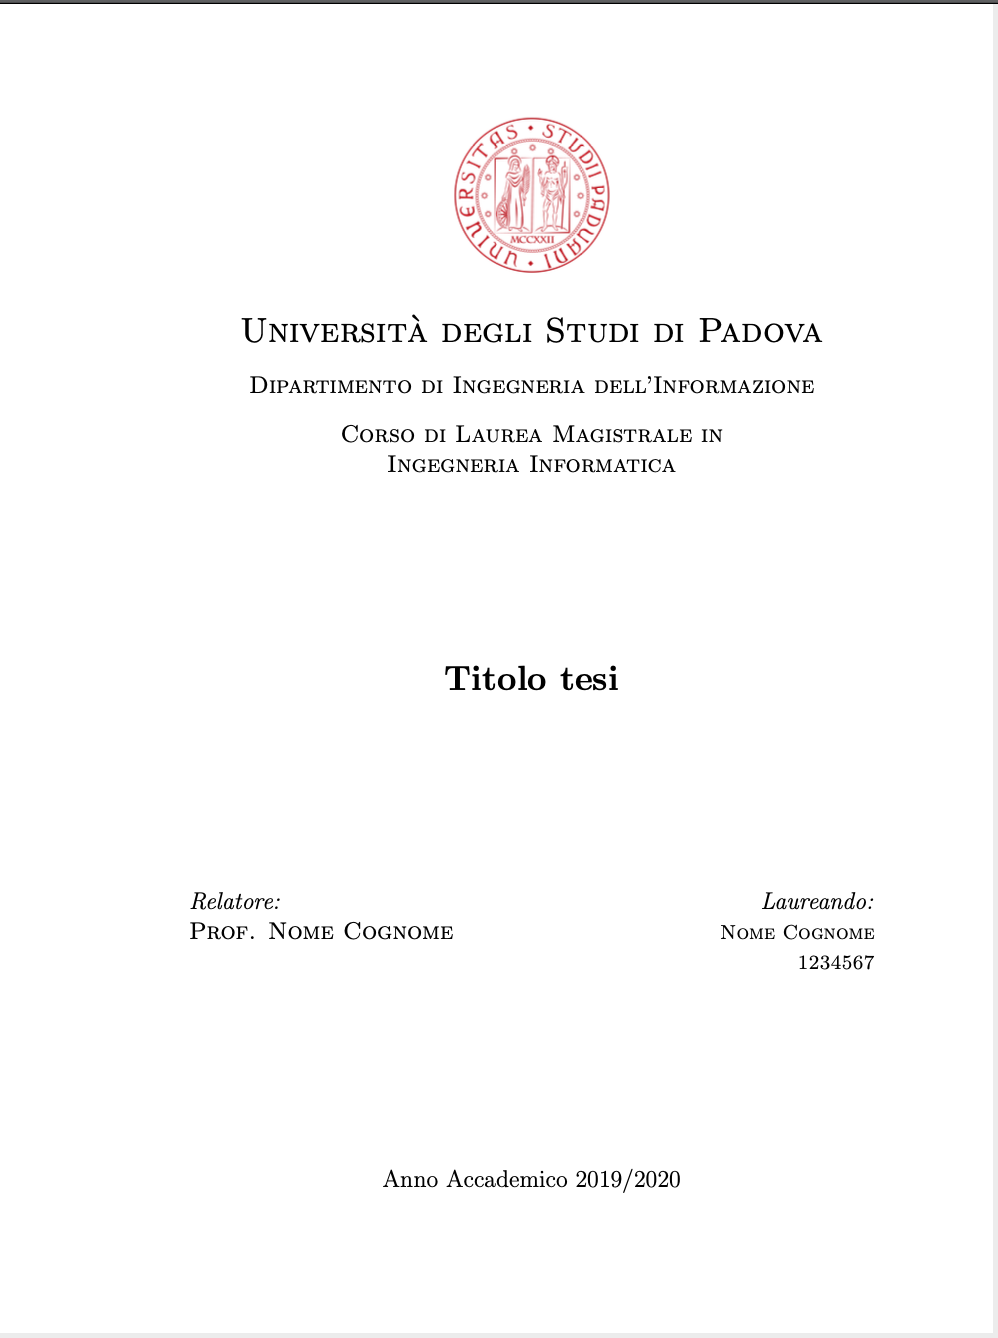 thesis unimi